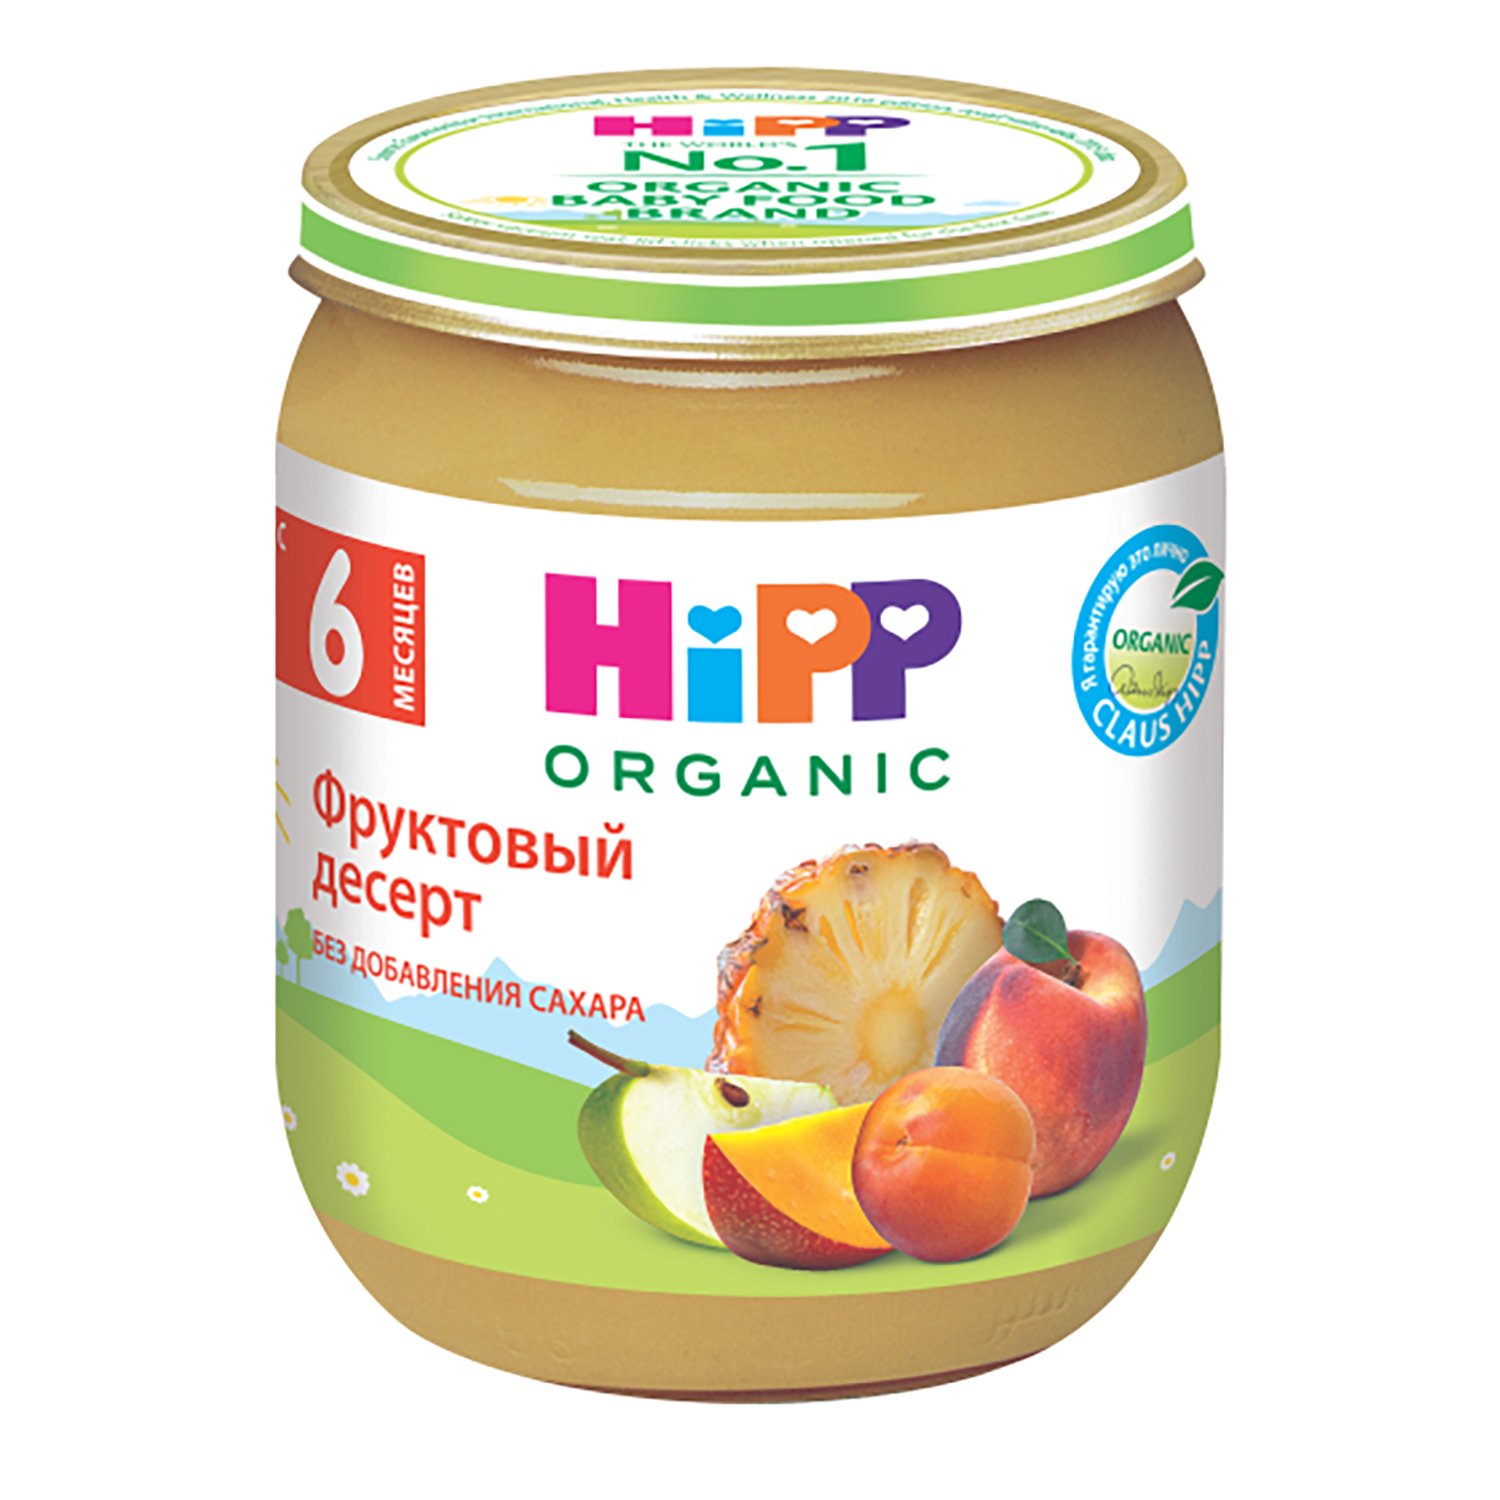 Hipp organic пюре фруктовый десерт без сахара 6+месяцев 125г